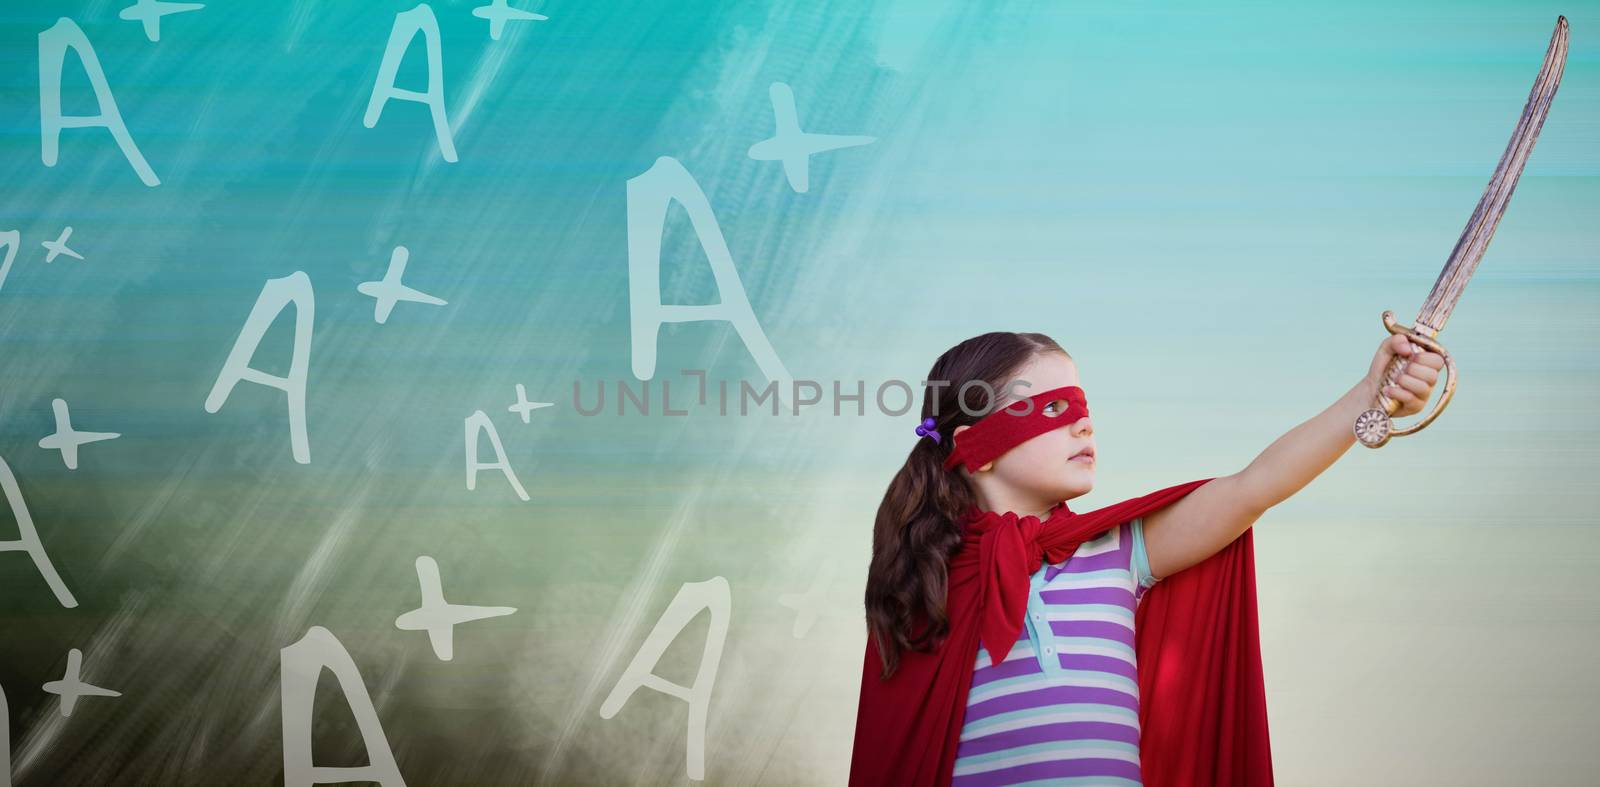 Composite image of girl in superhero costume holding artificial sword by Wavebreakmedia